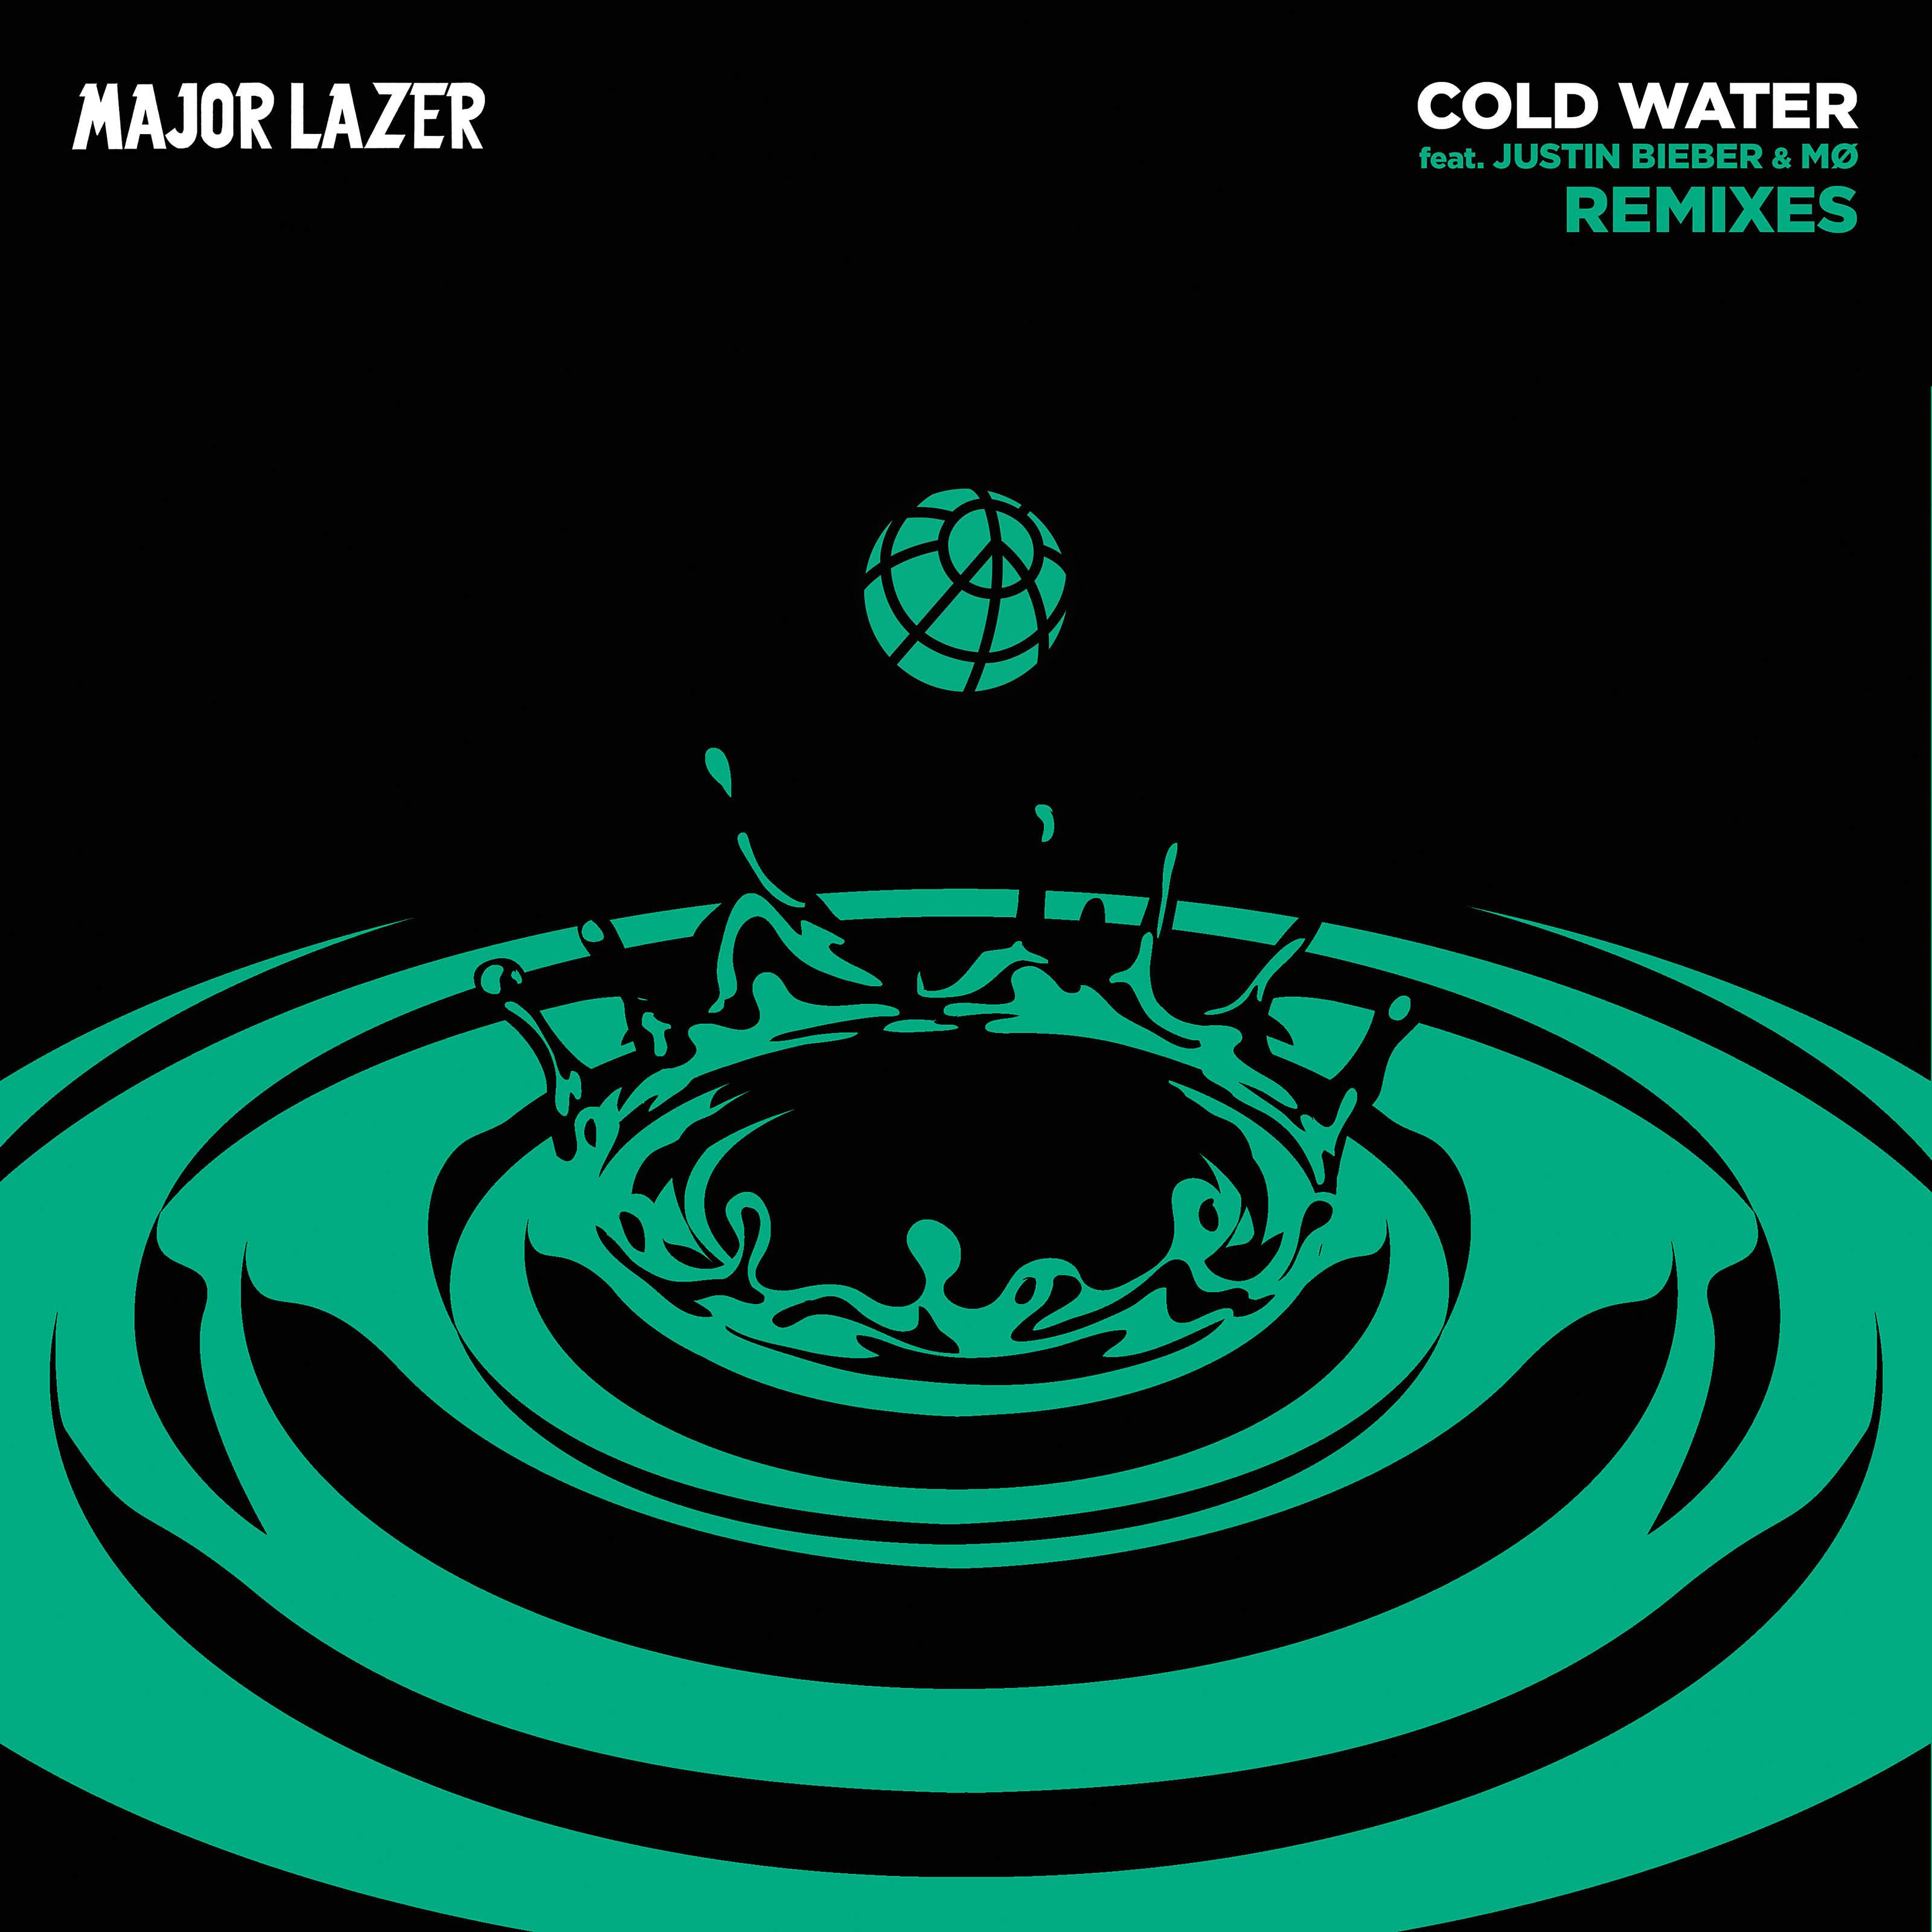 Major lazer remix. Cold Water Major Lazer. Major Lazer - Cold Water (feat. Justin Bieber & MØ). Major Lazer feat. Major Lazer обложки альбомов.